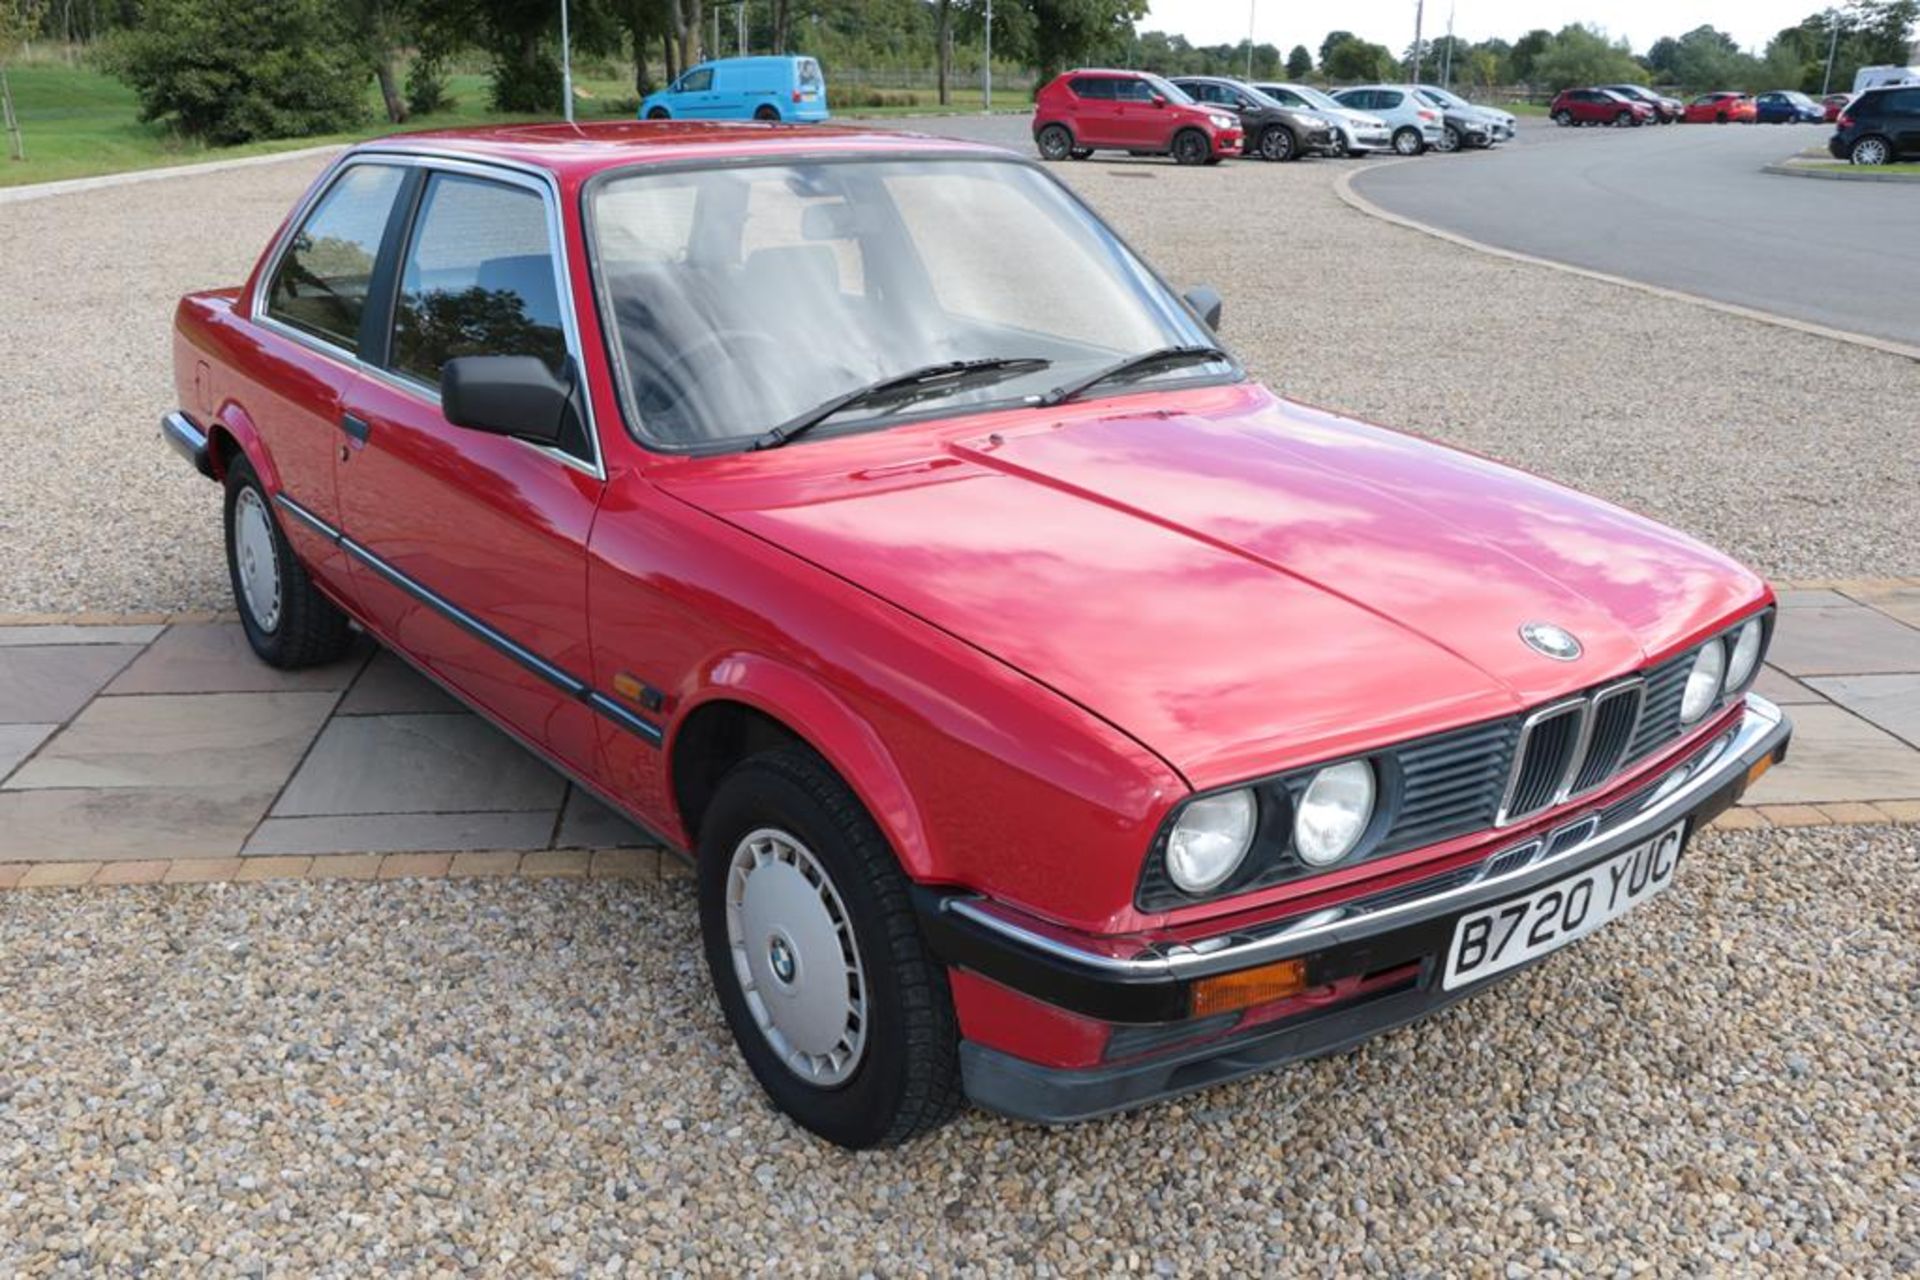 1985 BMW 320I Automatic Registration number: B720 YUC Date of first registration: 15/03/1985 VIN - Bild 3 aus 7